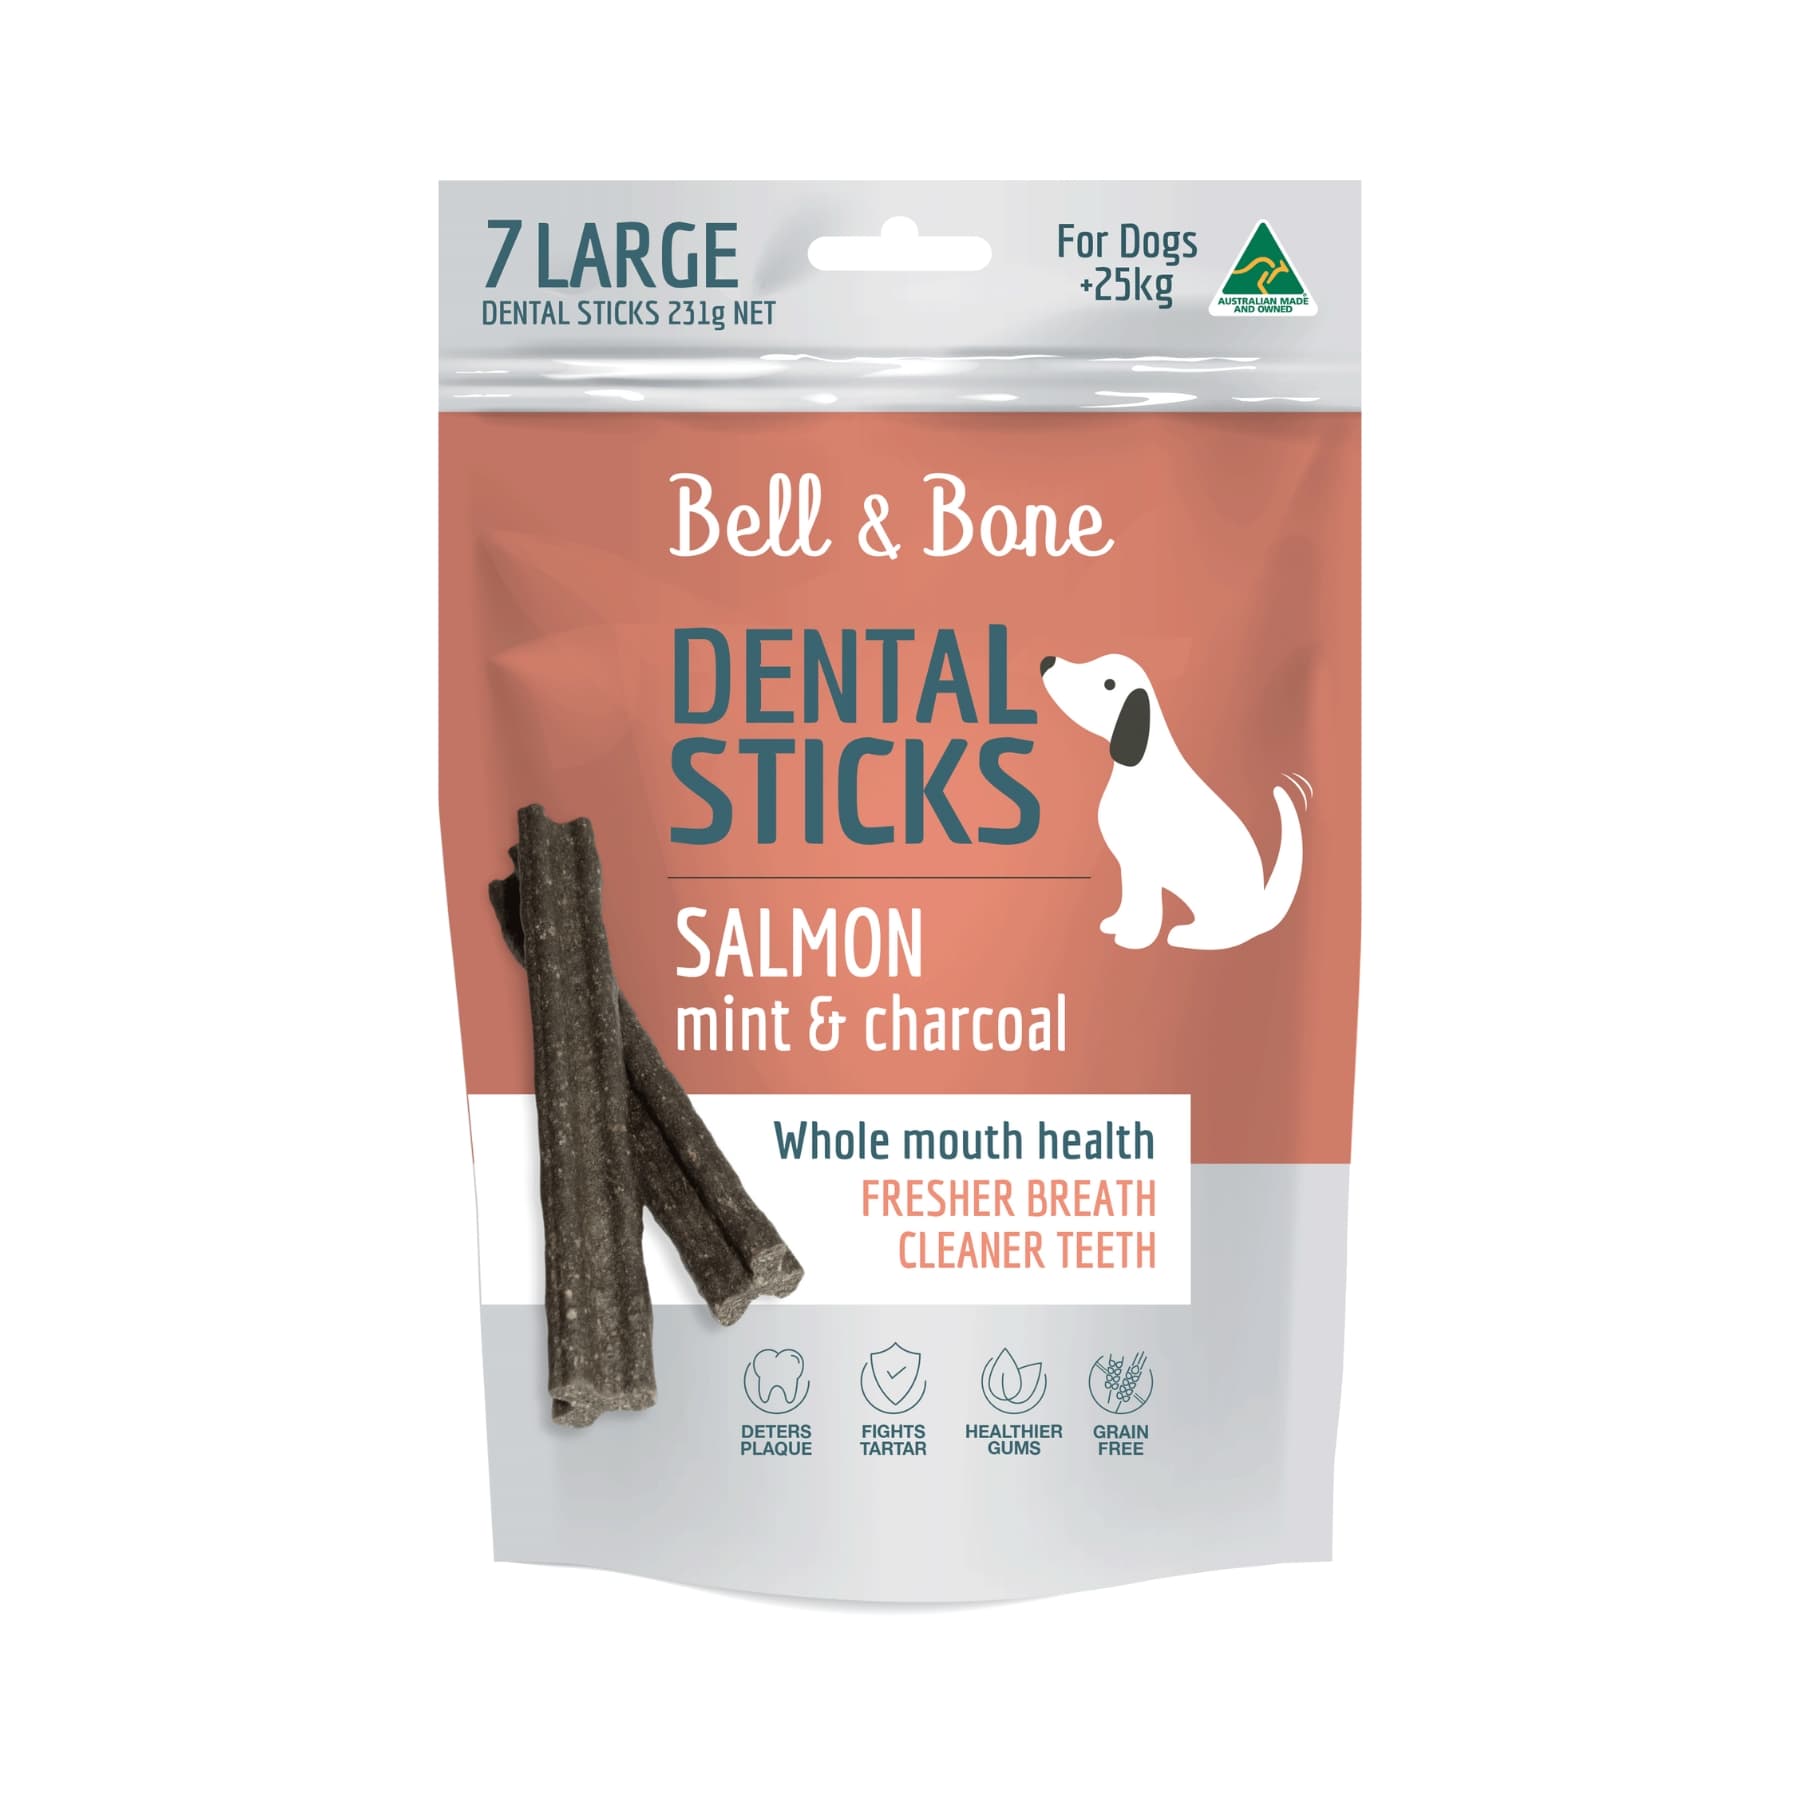 Bell & Bone Dental Sticks Salmon, Mint & Charcoal Large. Australian Made Dental Treats for Dogs.